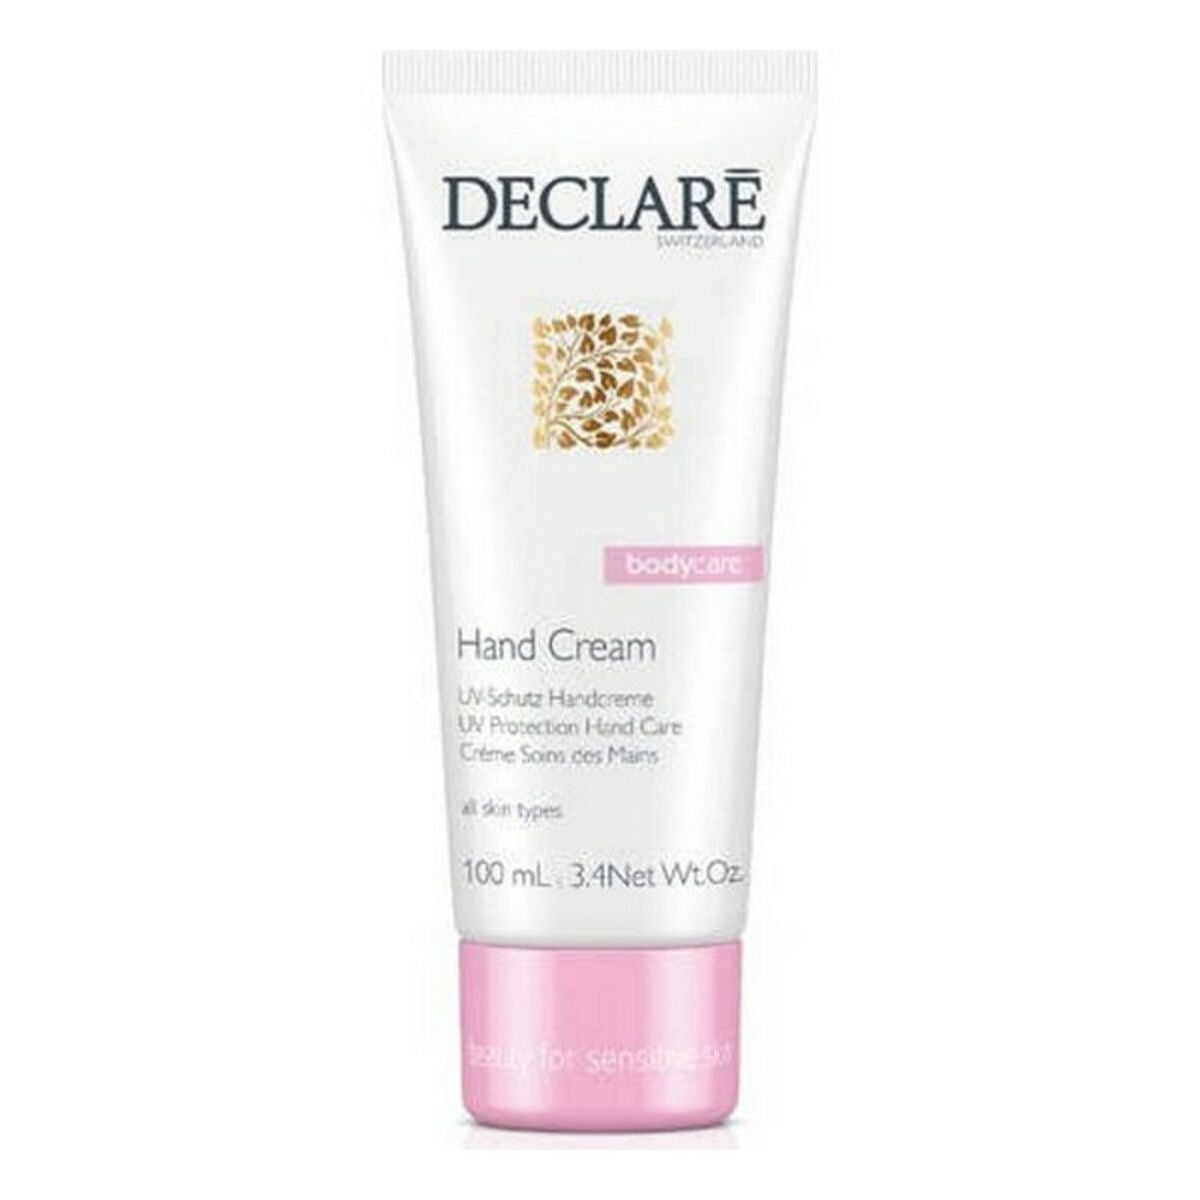 Hand Cream Body Care Declaré 16059800 (100 ml) Gel Cream Lady (1 Unit) | Declaré | Aylal Beauty